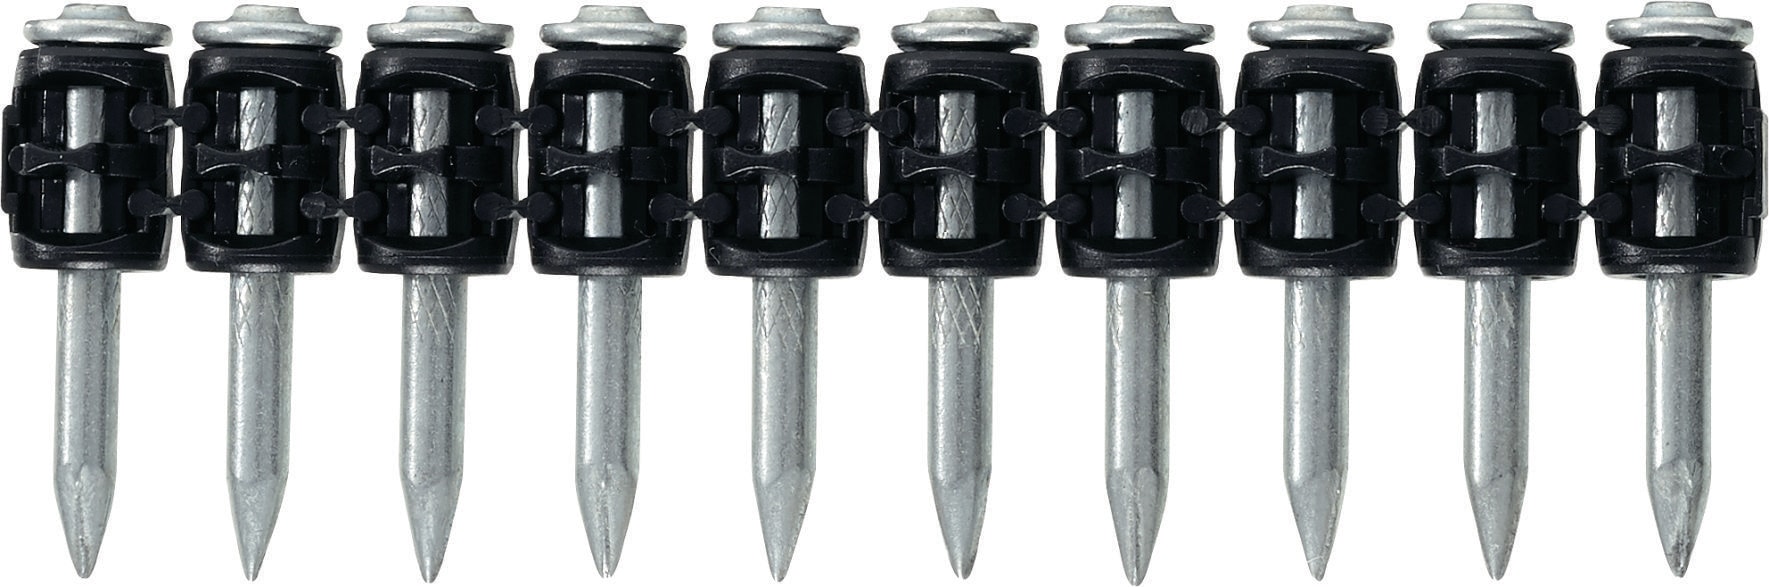 Hilti Cartridge Nails Length 22mm D-450 ENK 22S12 NK 22S12 Box of 100 |  Melbros